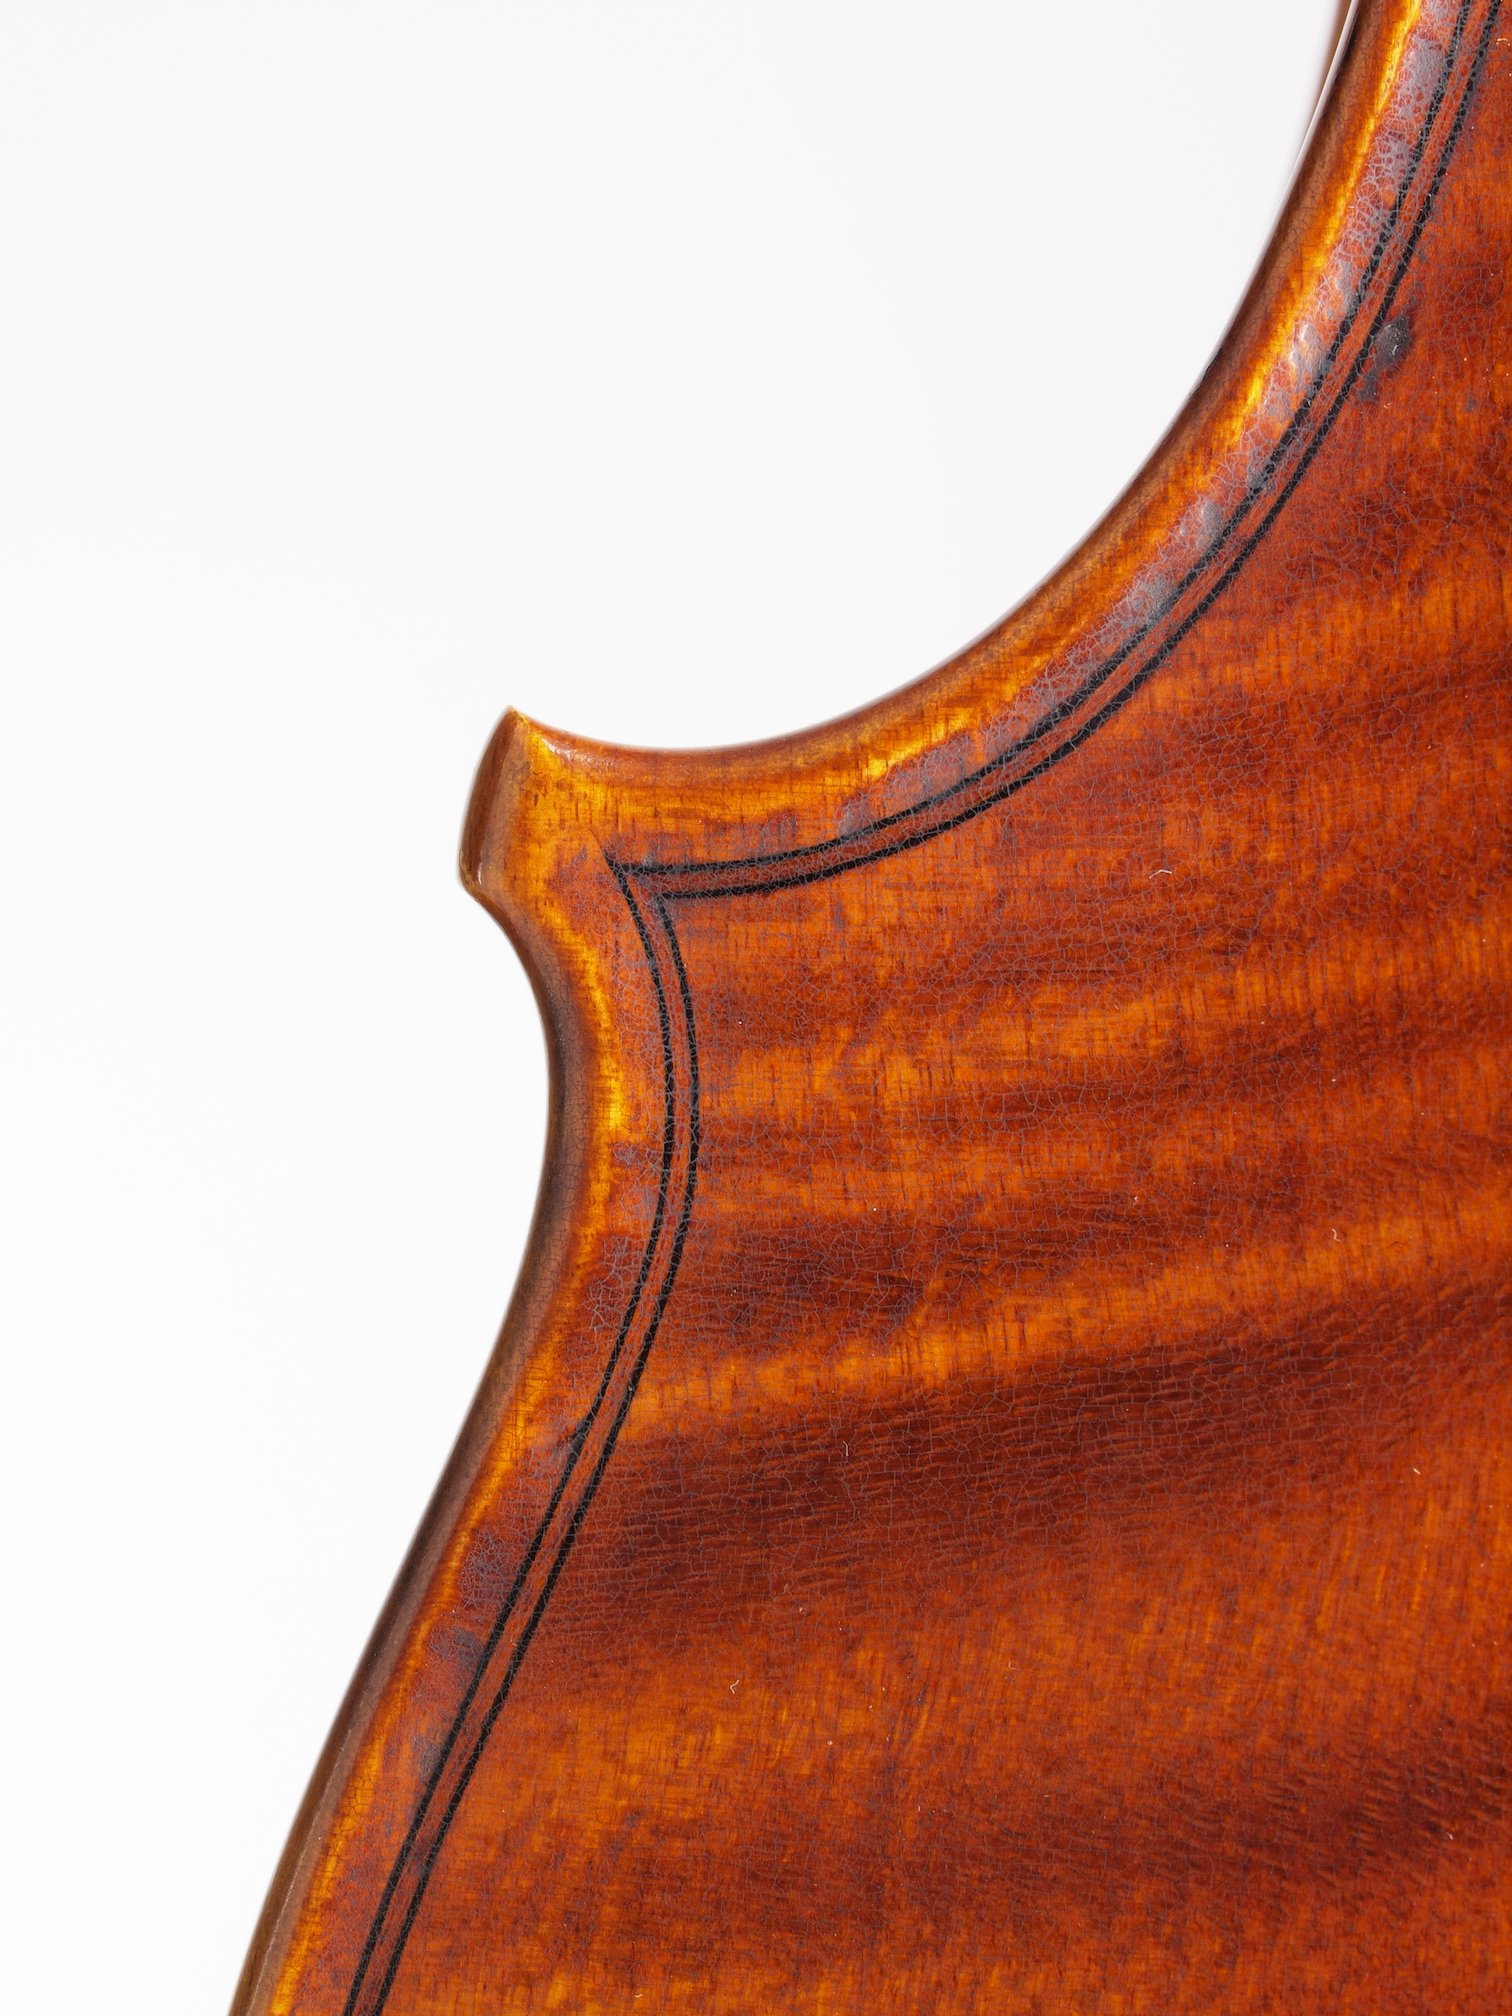 Violin based on the model of the "Sauret" Guarneri del Gesu anno 1743 III